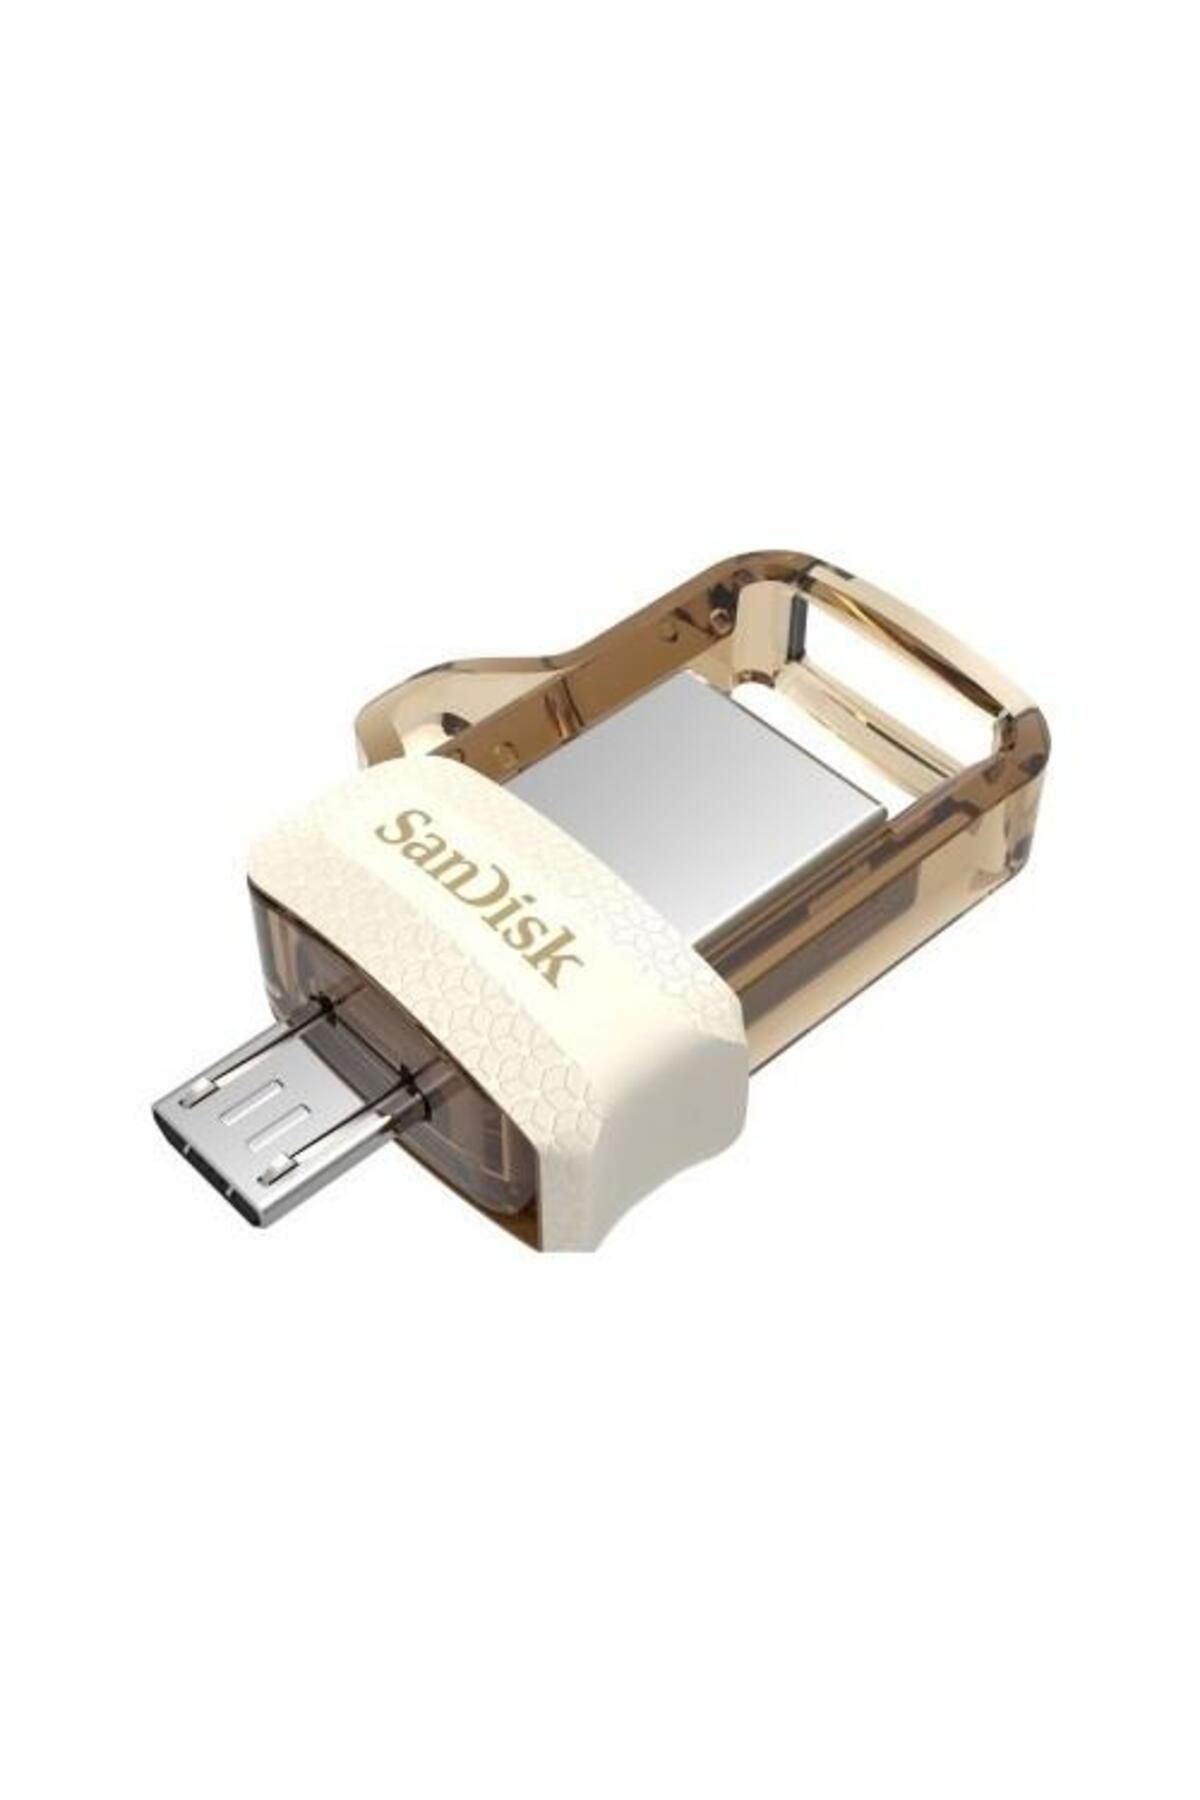 Sandisk Dual Drive OTG 32GB Gold MicroUsb Bellek SDDD3-032G